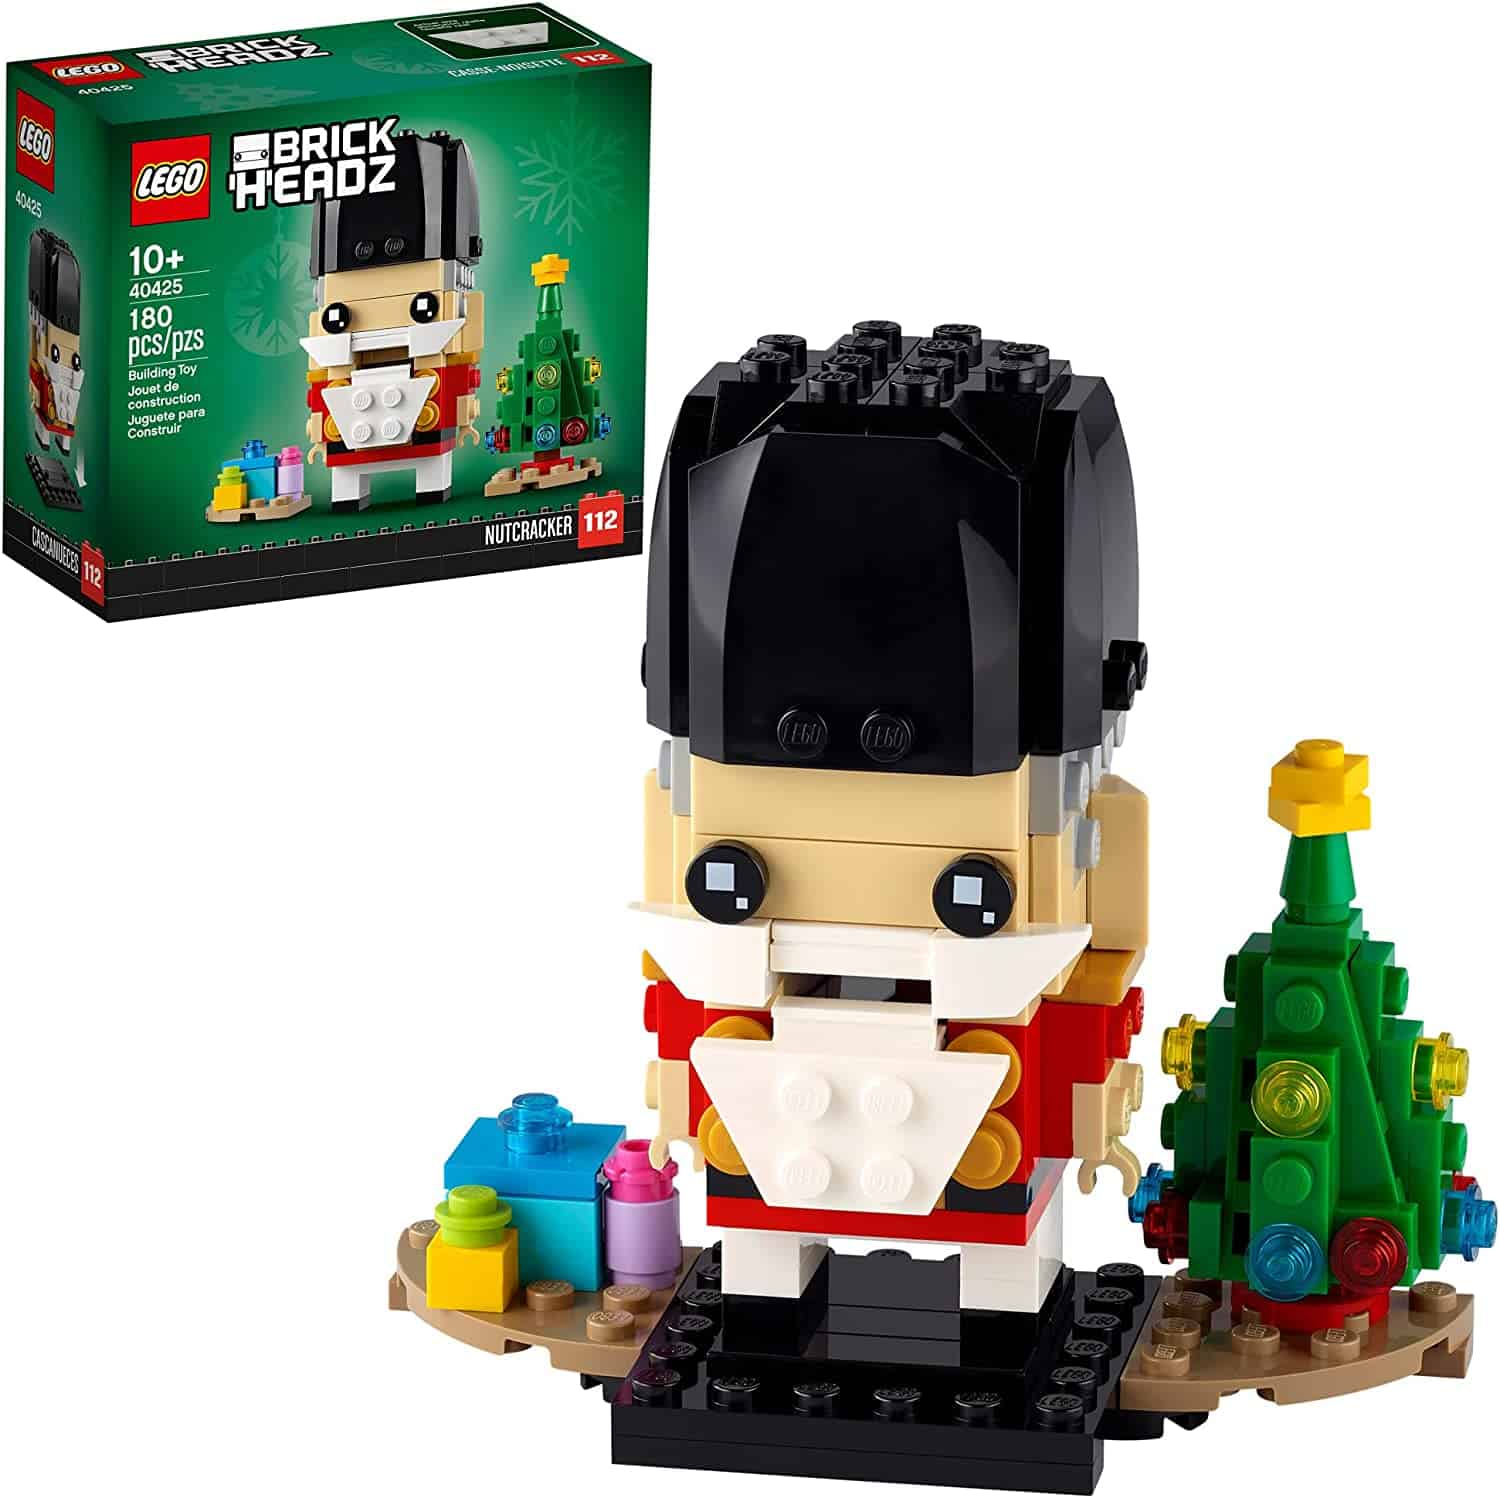 LEGO BrickHeadz Nutcracker ONLY $9.99 on Amazon